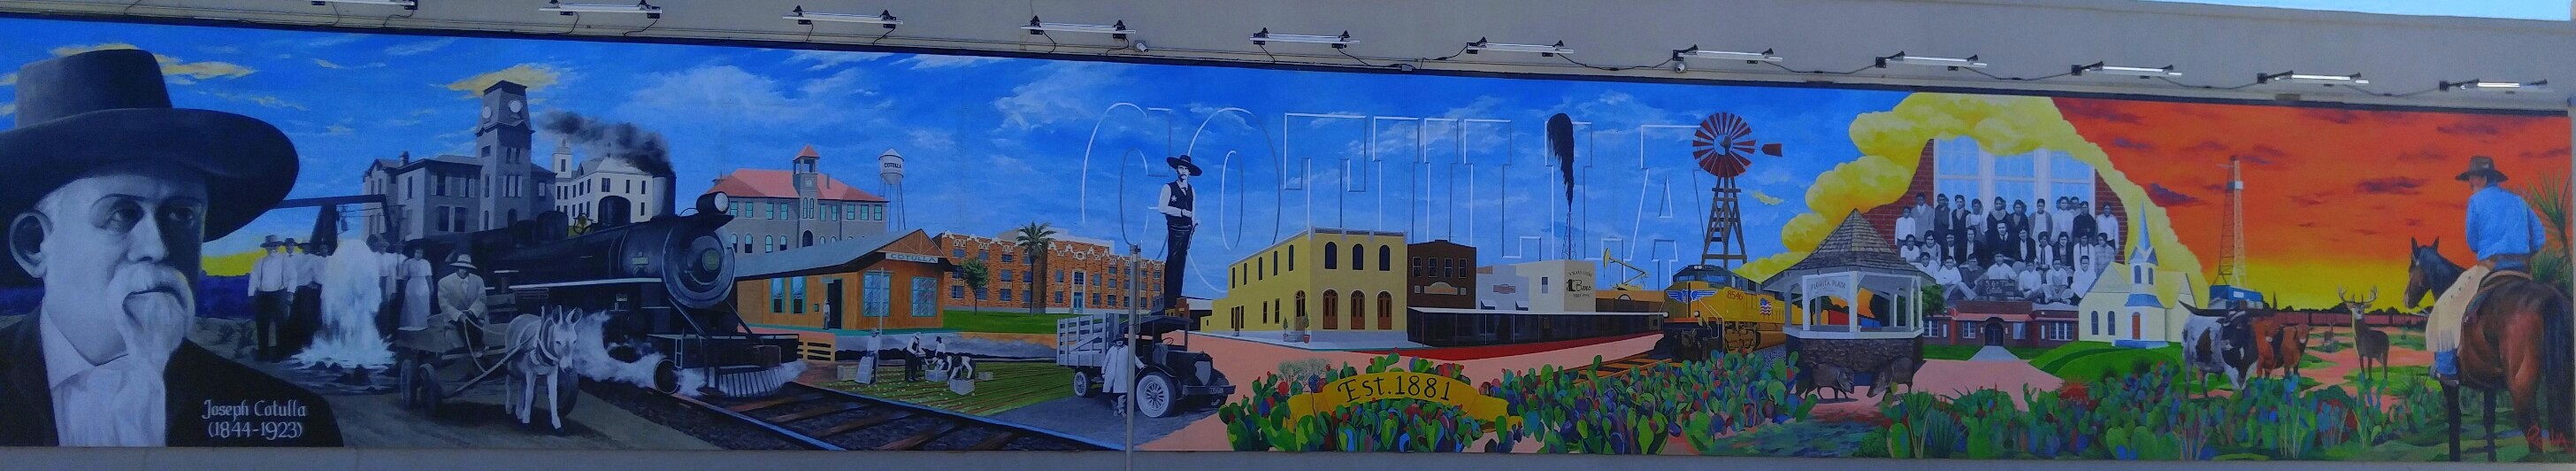 Cotulla, TX, mural, Joseph Cotulla, cowboy, train